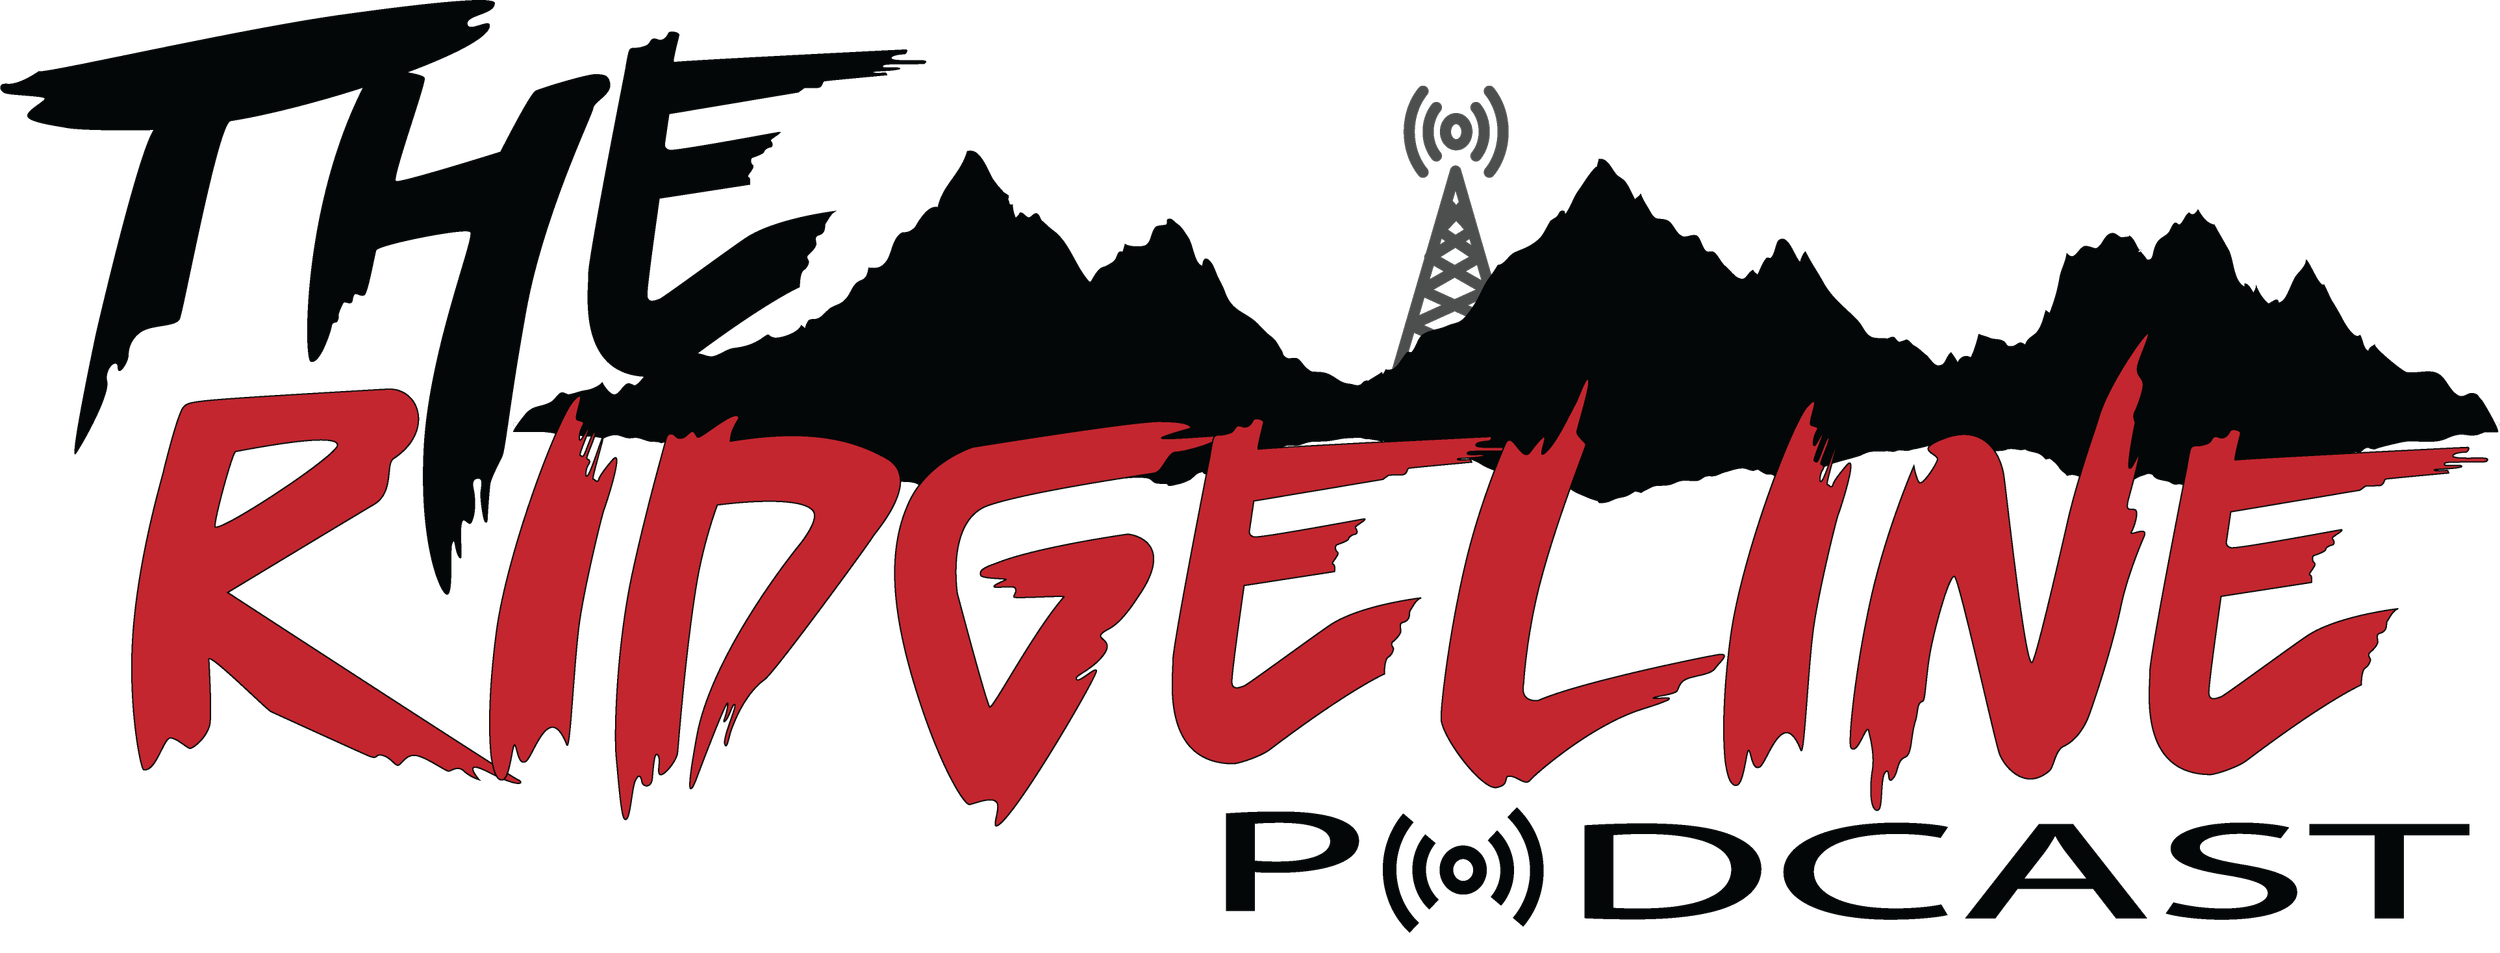 The ridgeline podcast logo.png